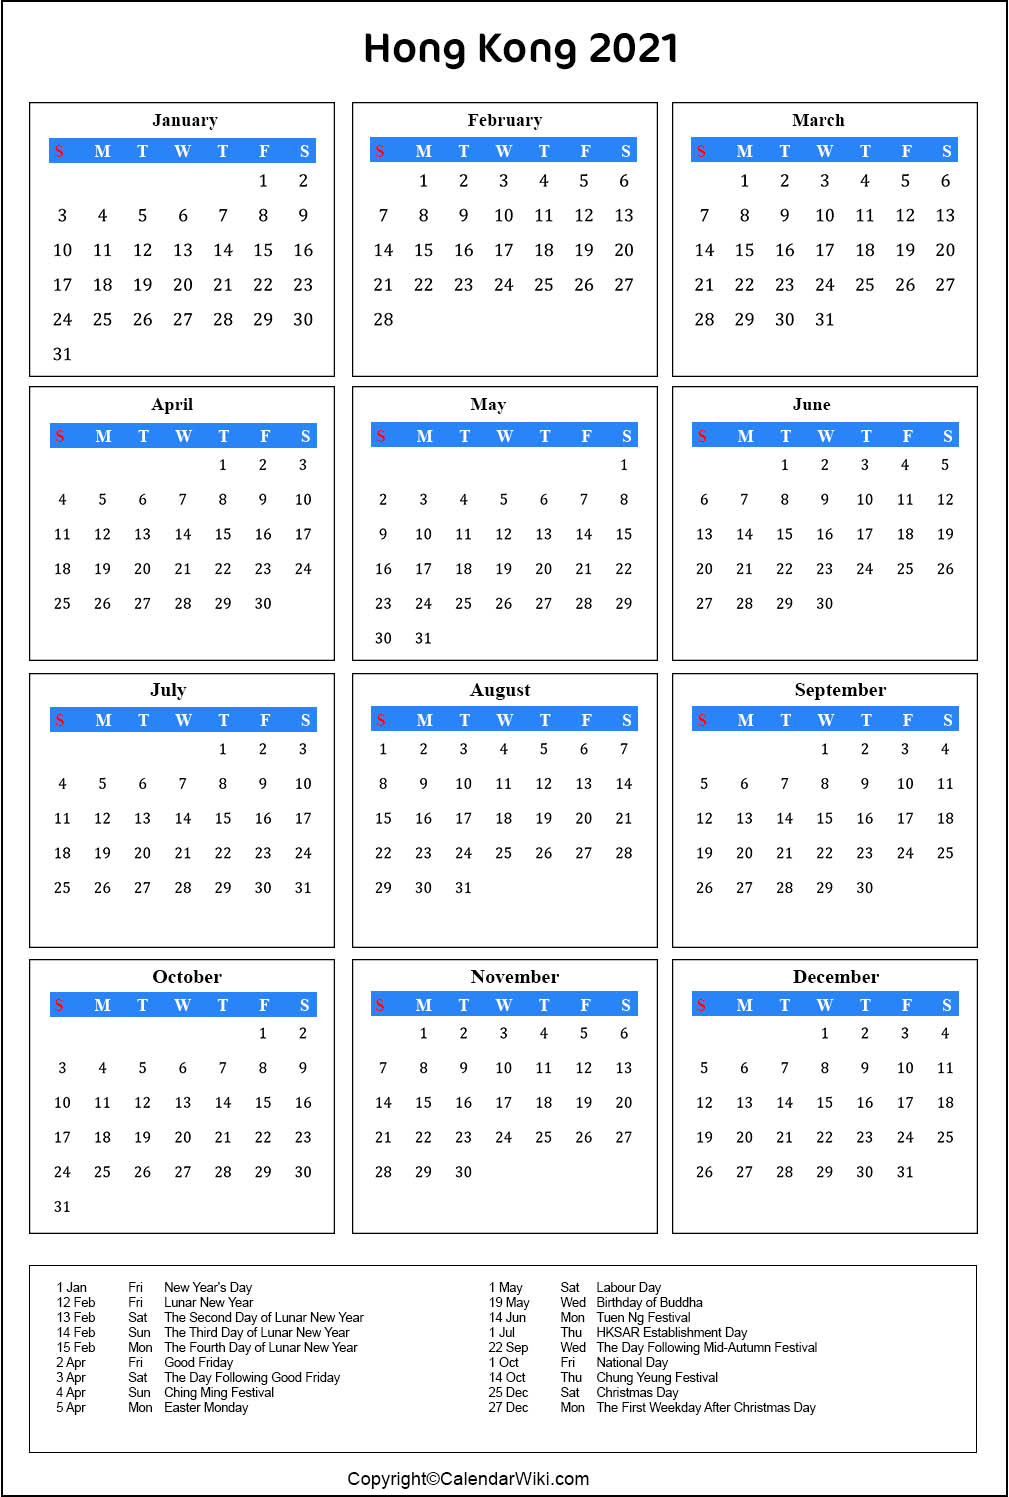 printable-hongkong-calendar-2021-with-holidays-public-holidays